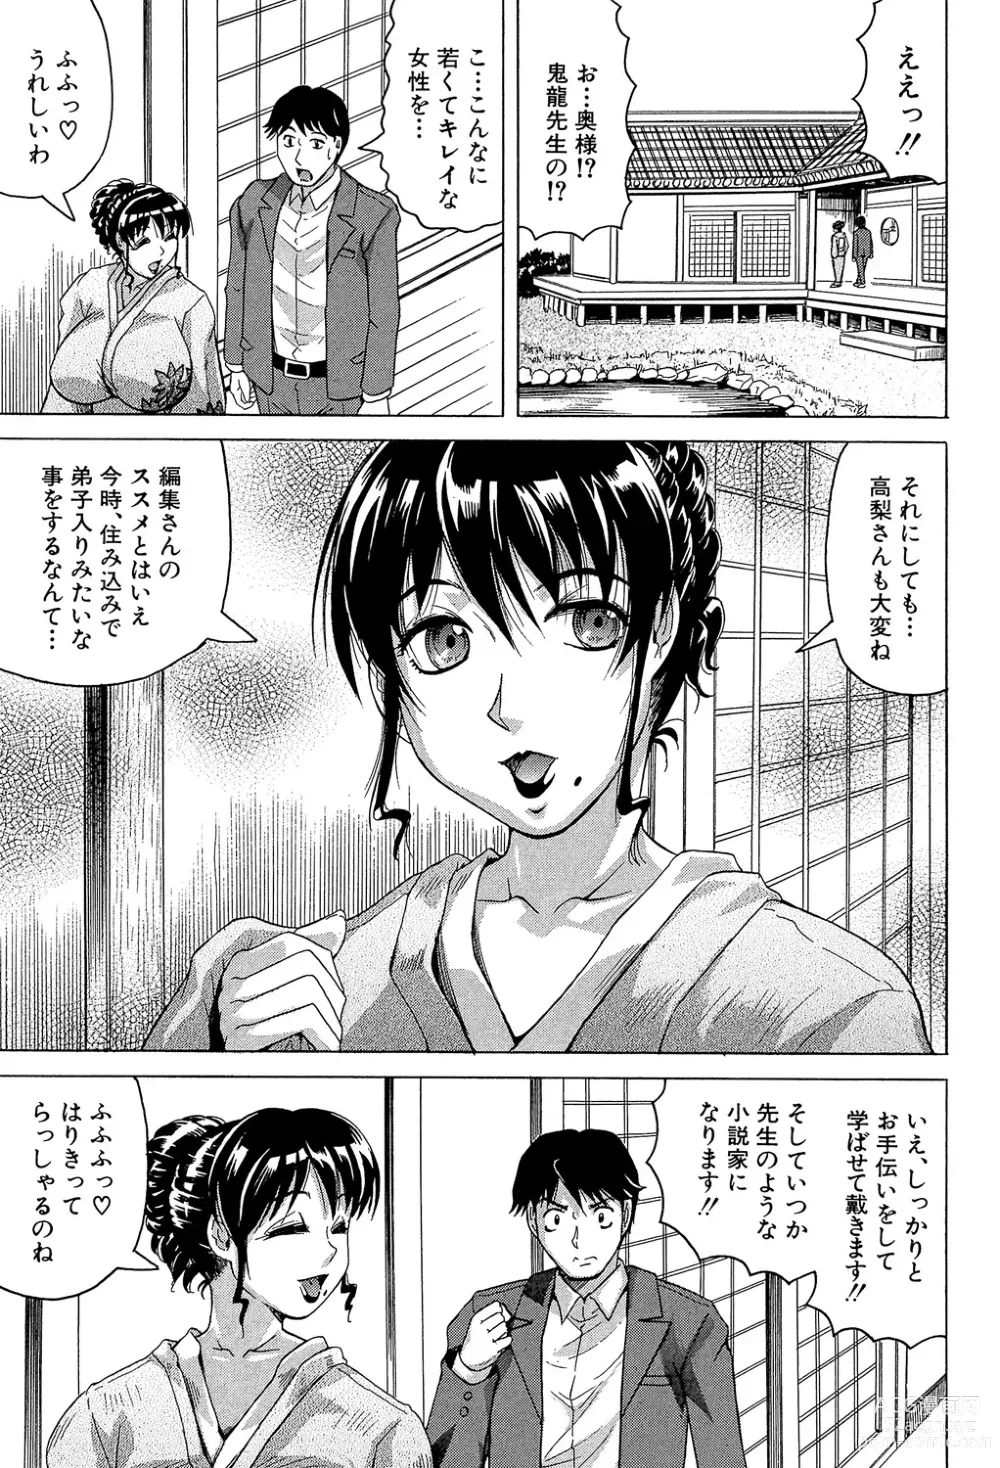 Page 9 of manga Oyako no Utage